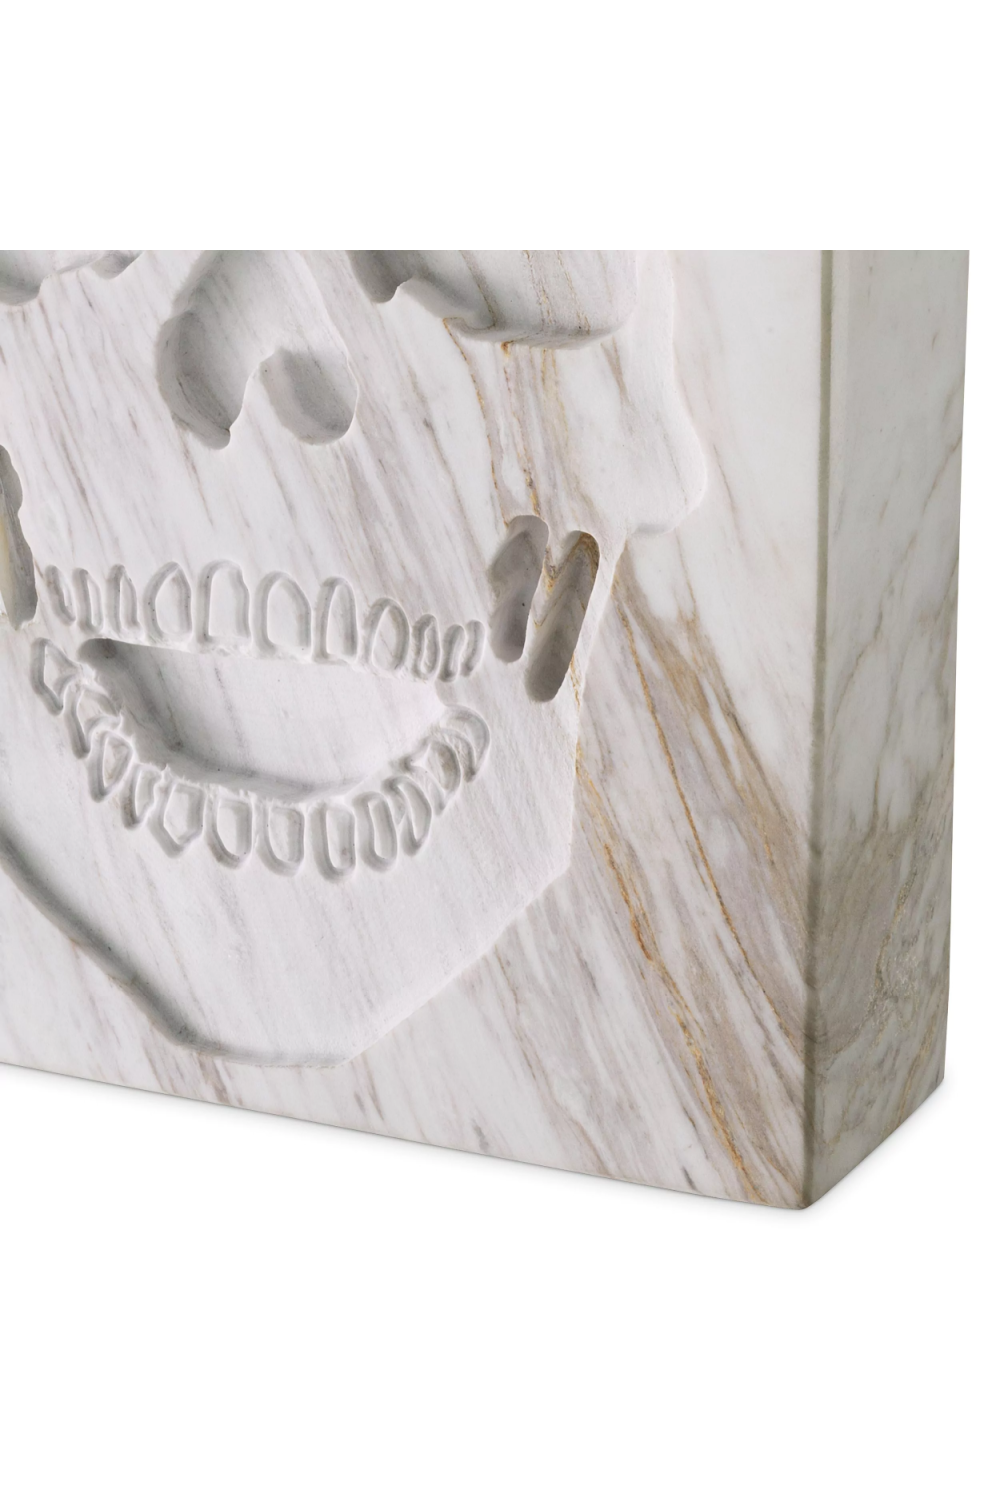 Marble Carved Deco Object | Philipp Plein Skull Oroa.com